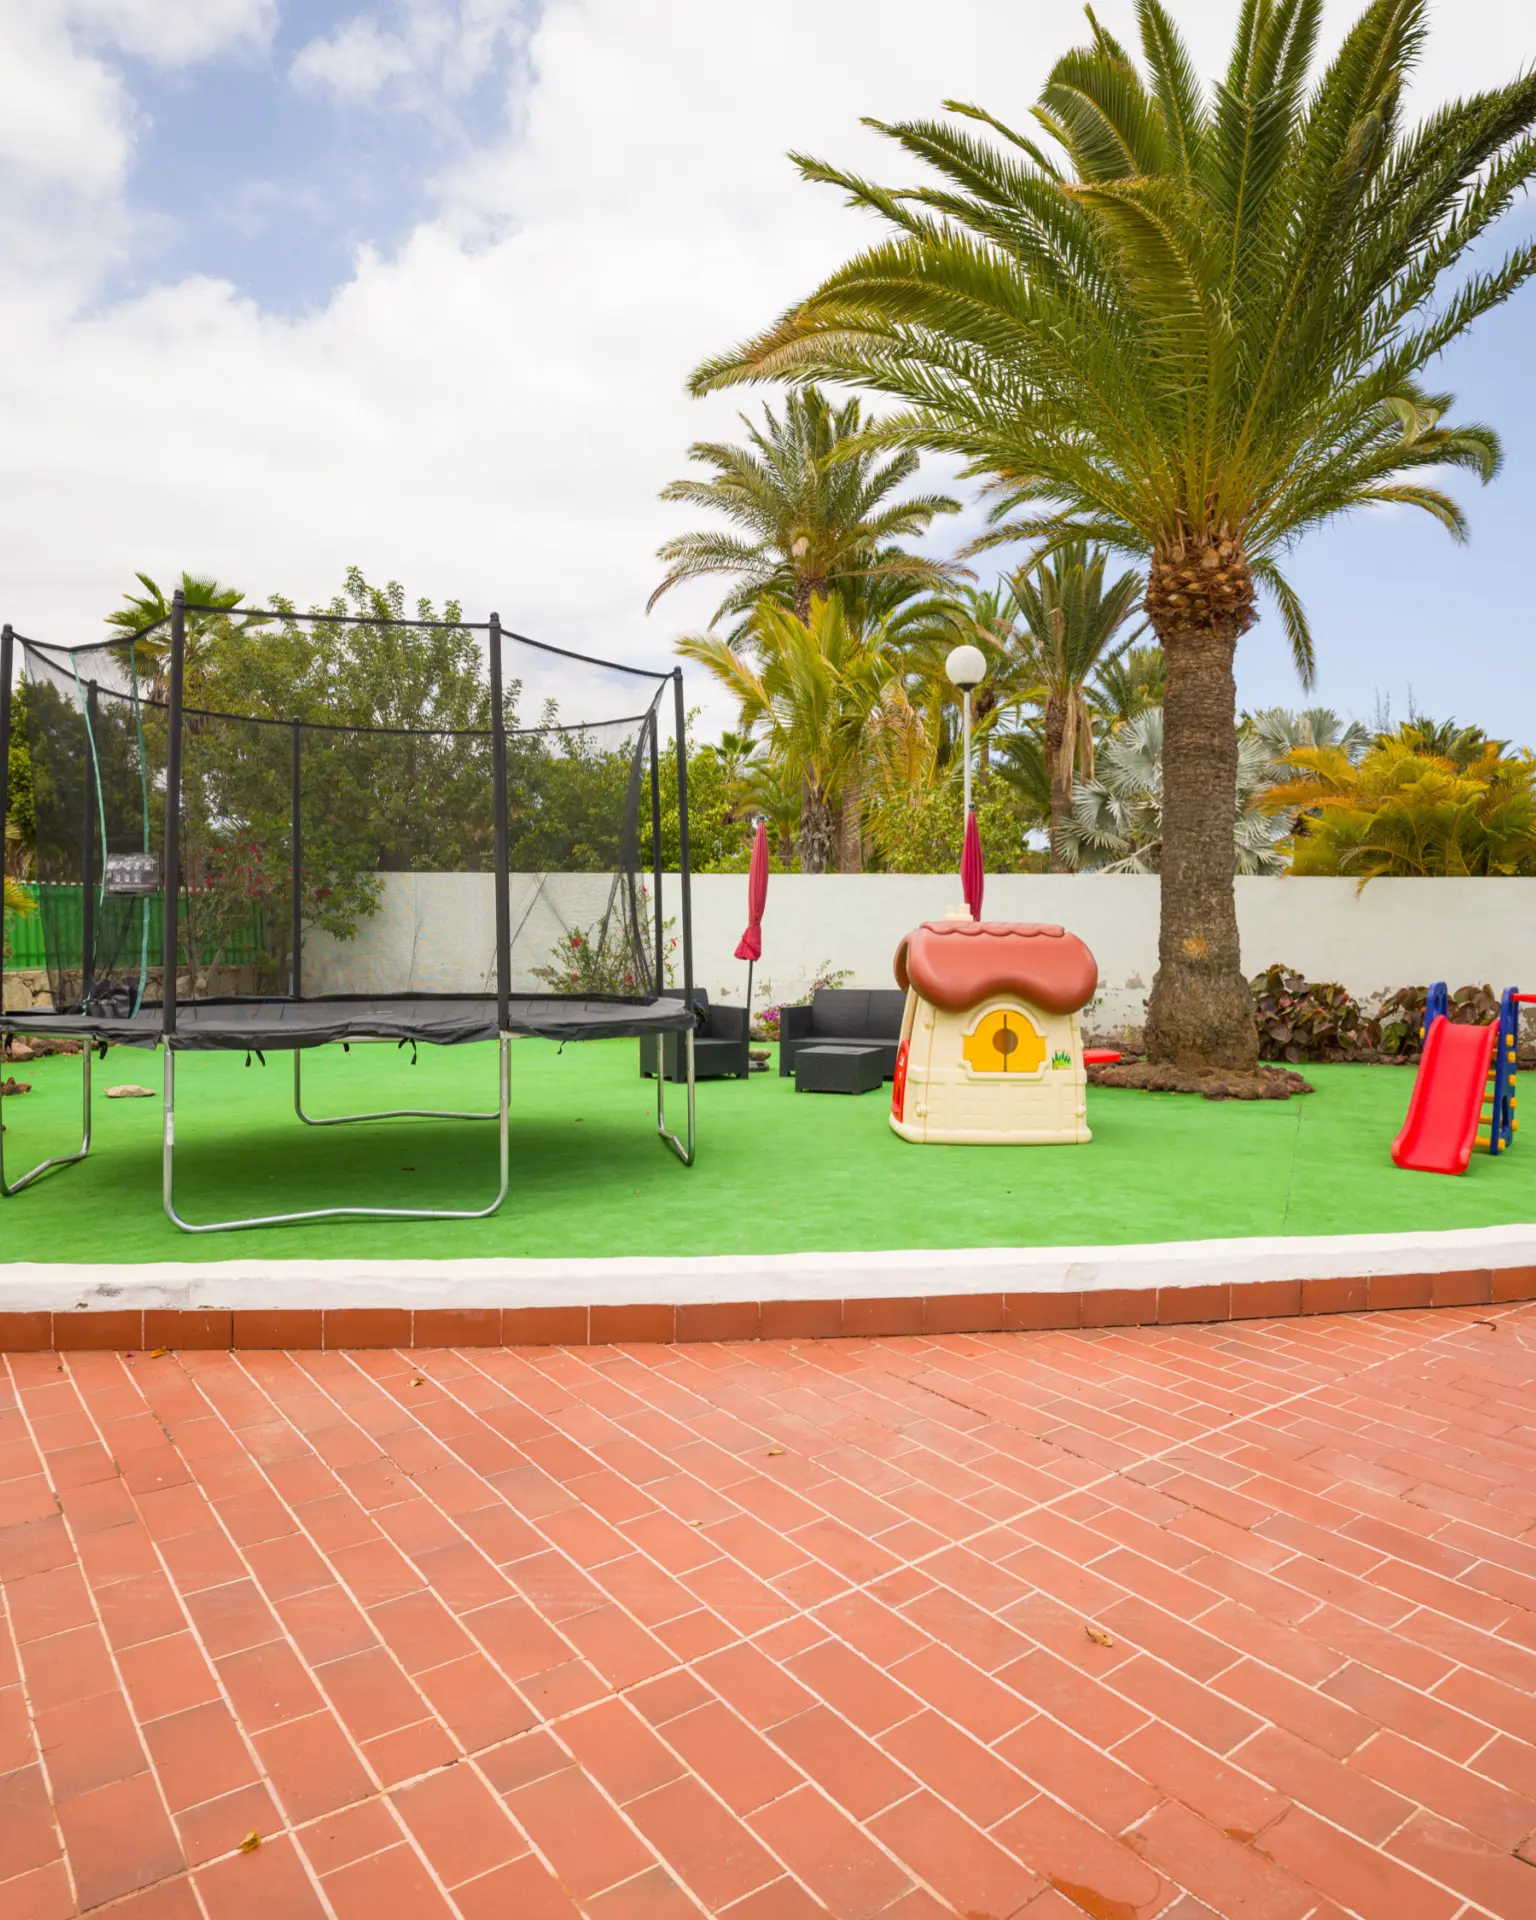 Villa in Maspalomas with childrens playground